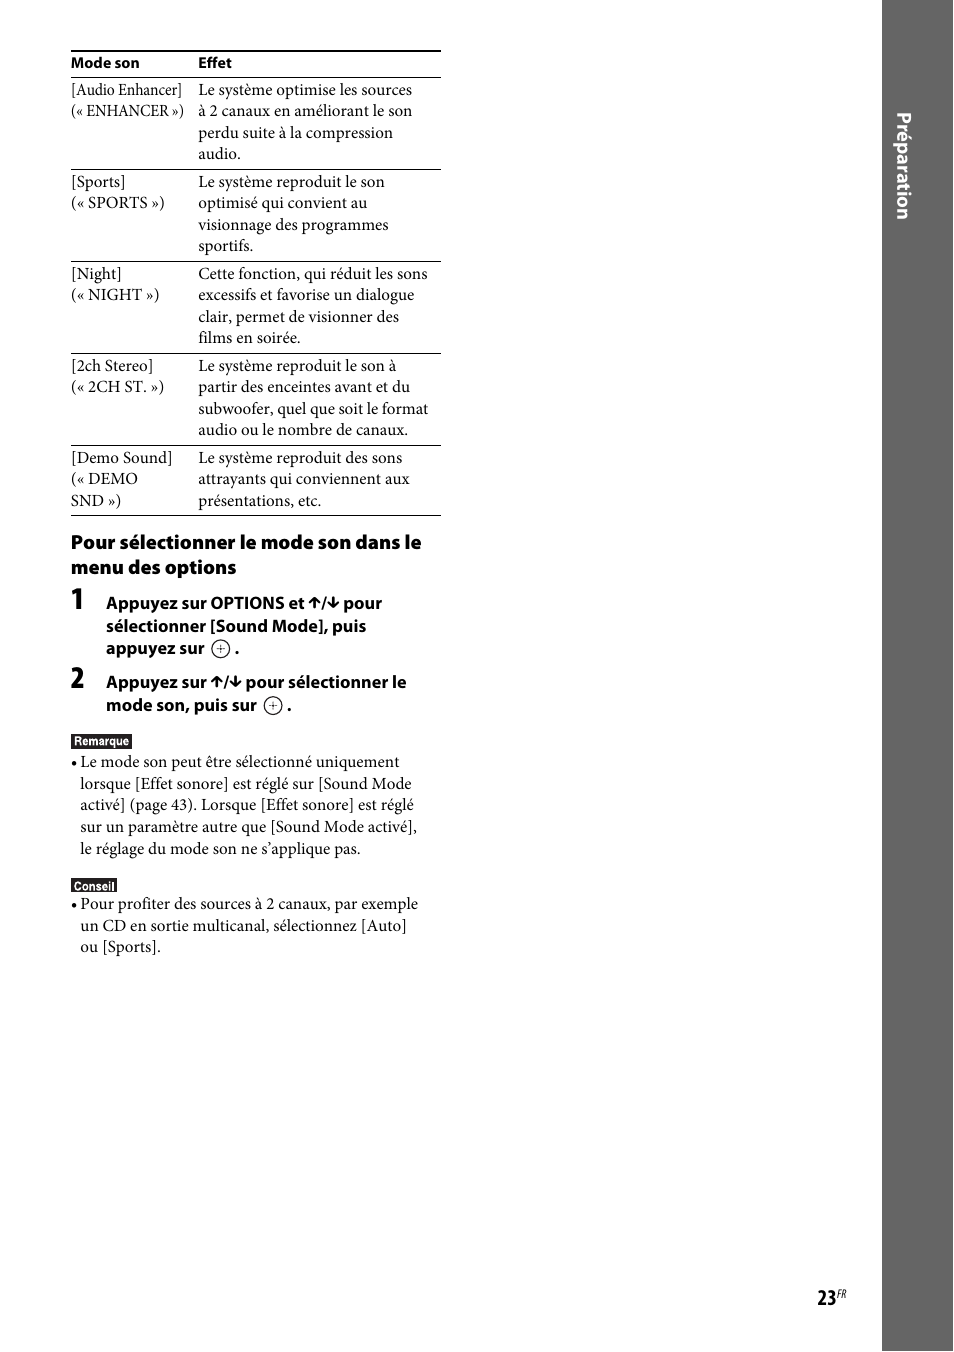 Sony BDV-E190 Manuel d'utilisation | Page 23 / 60